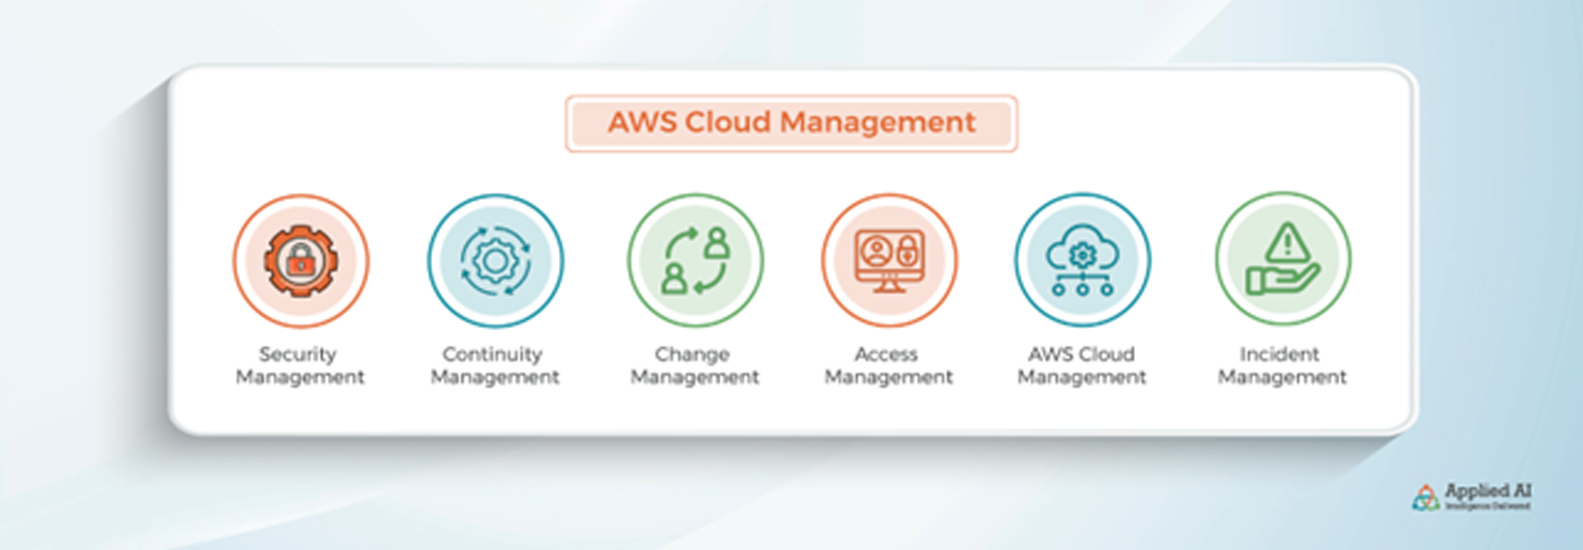 aws_cloud_management